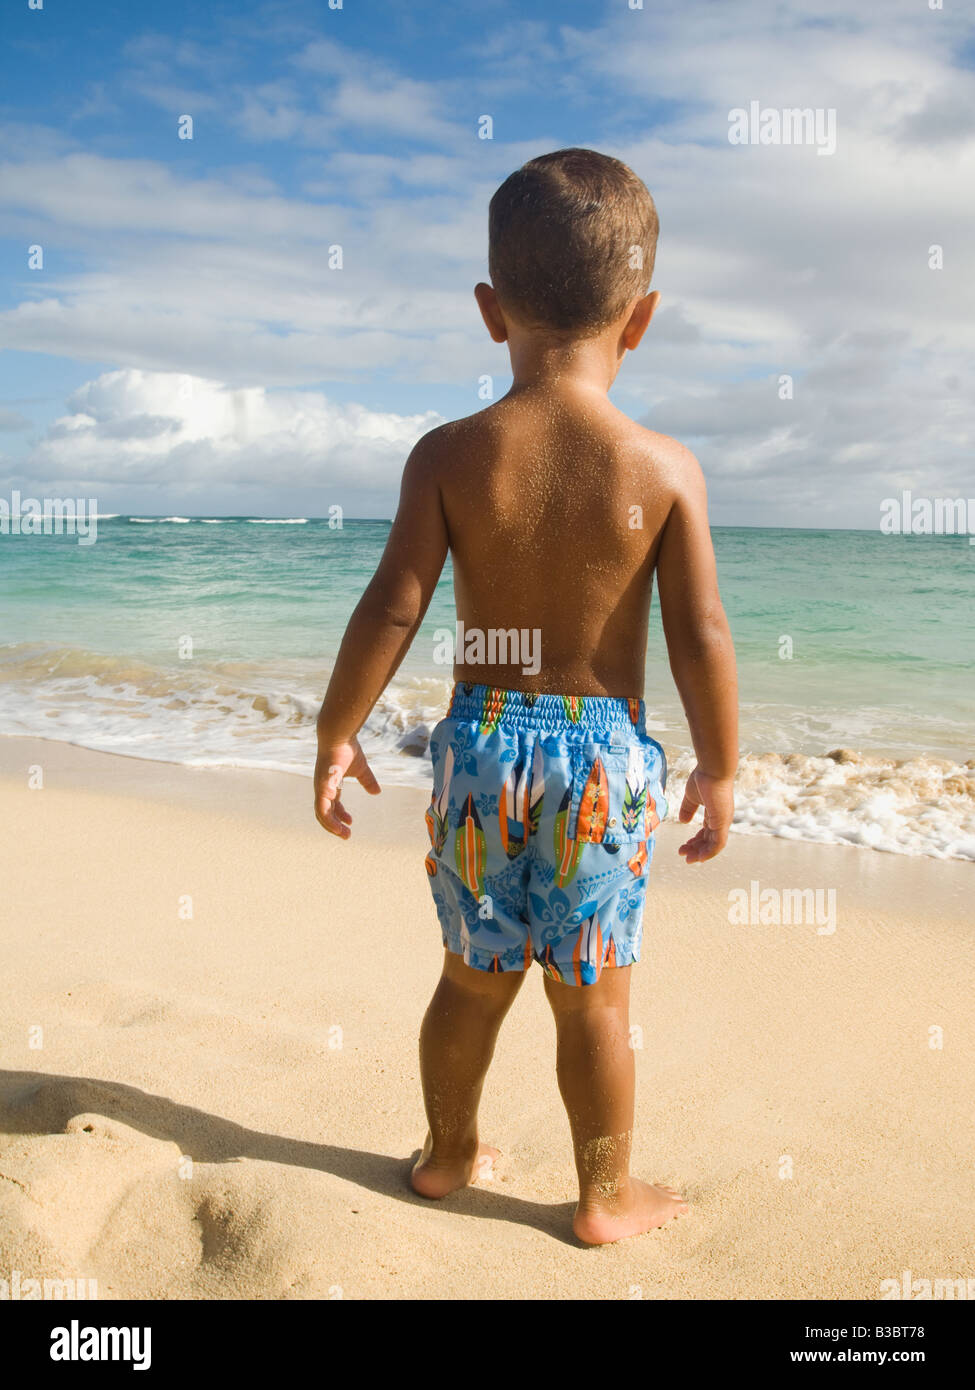 Pacific Islander boy looking at ocean Stock Photo